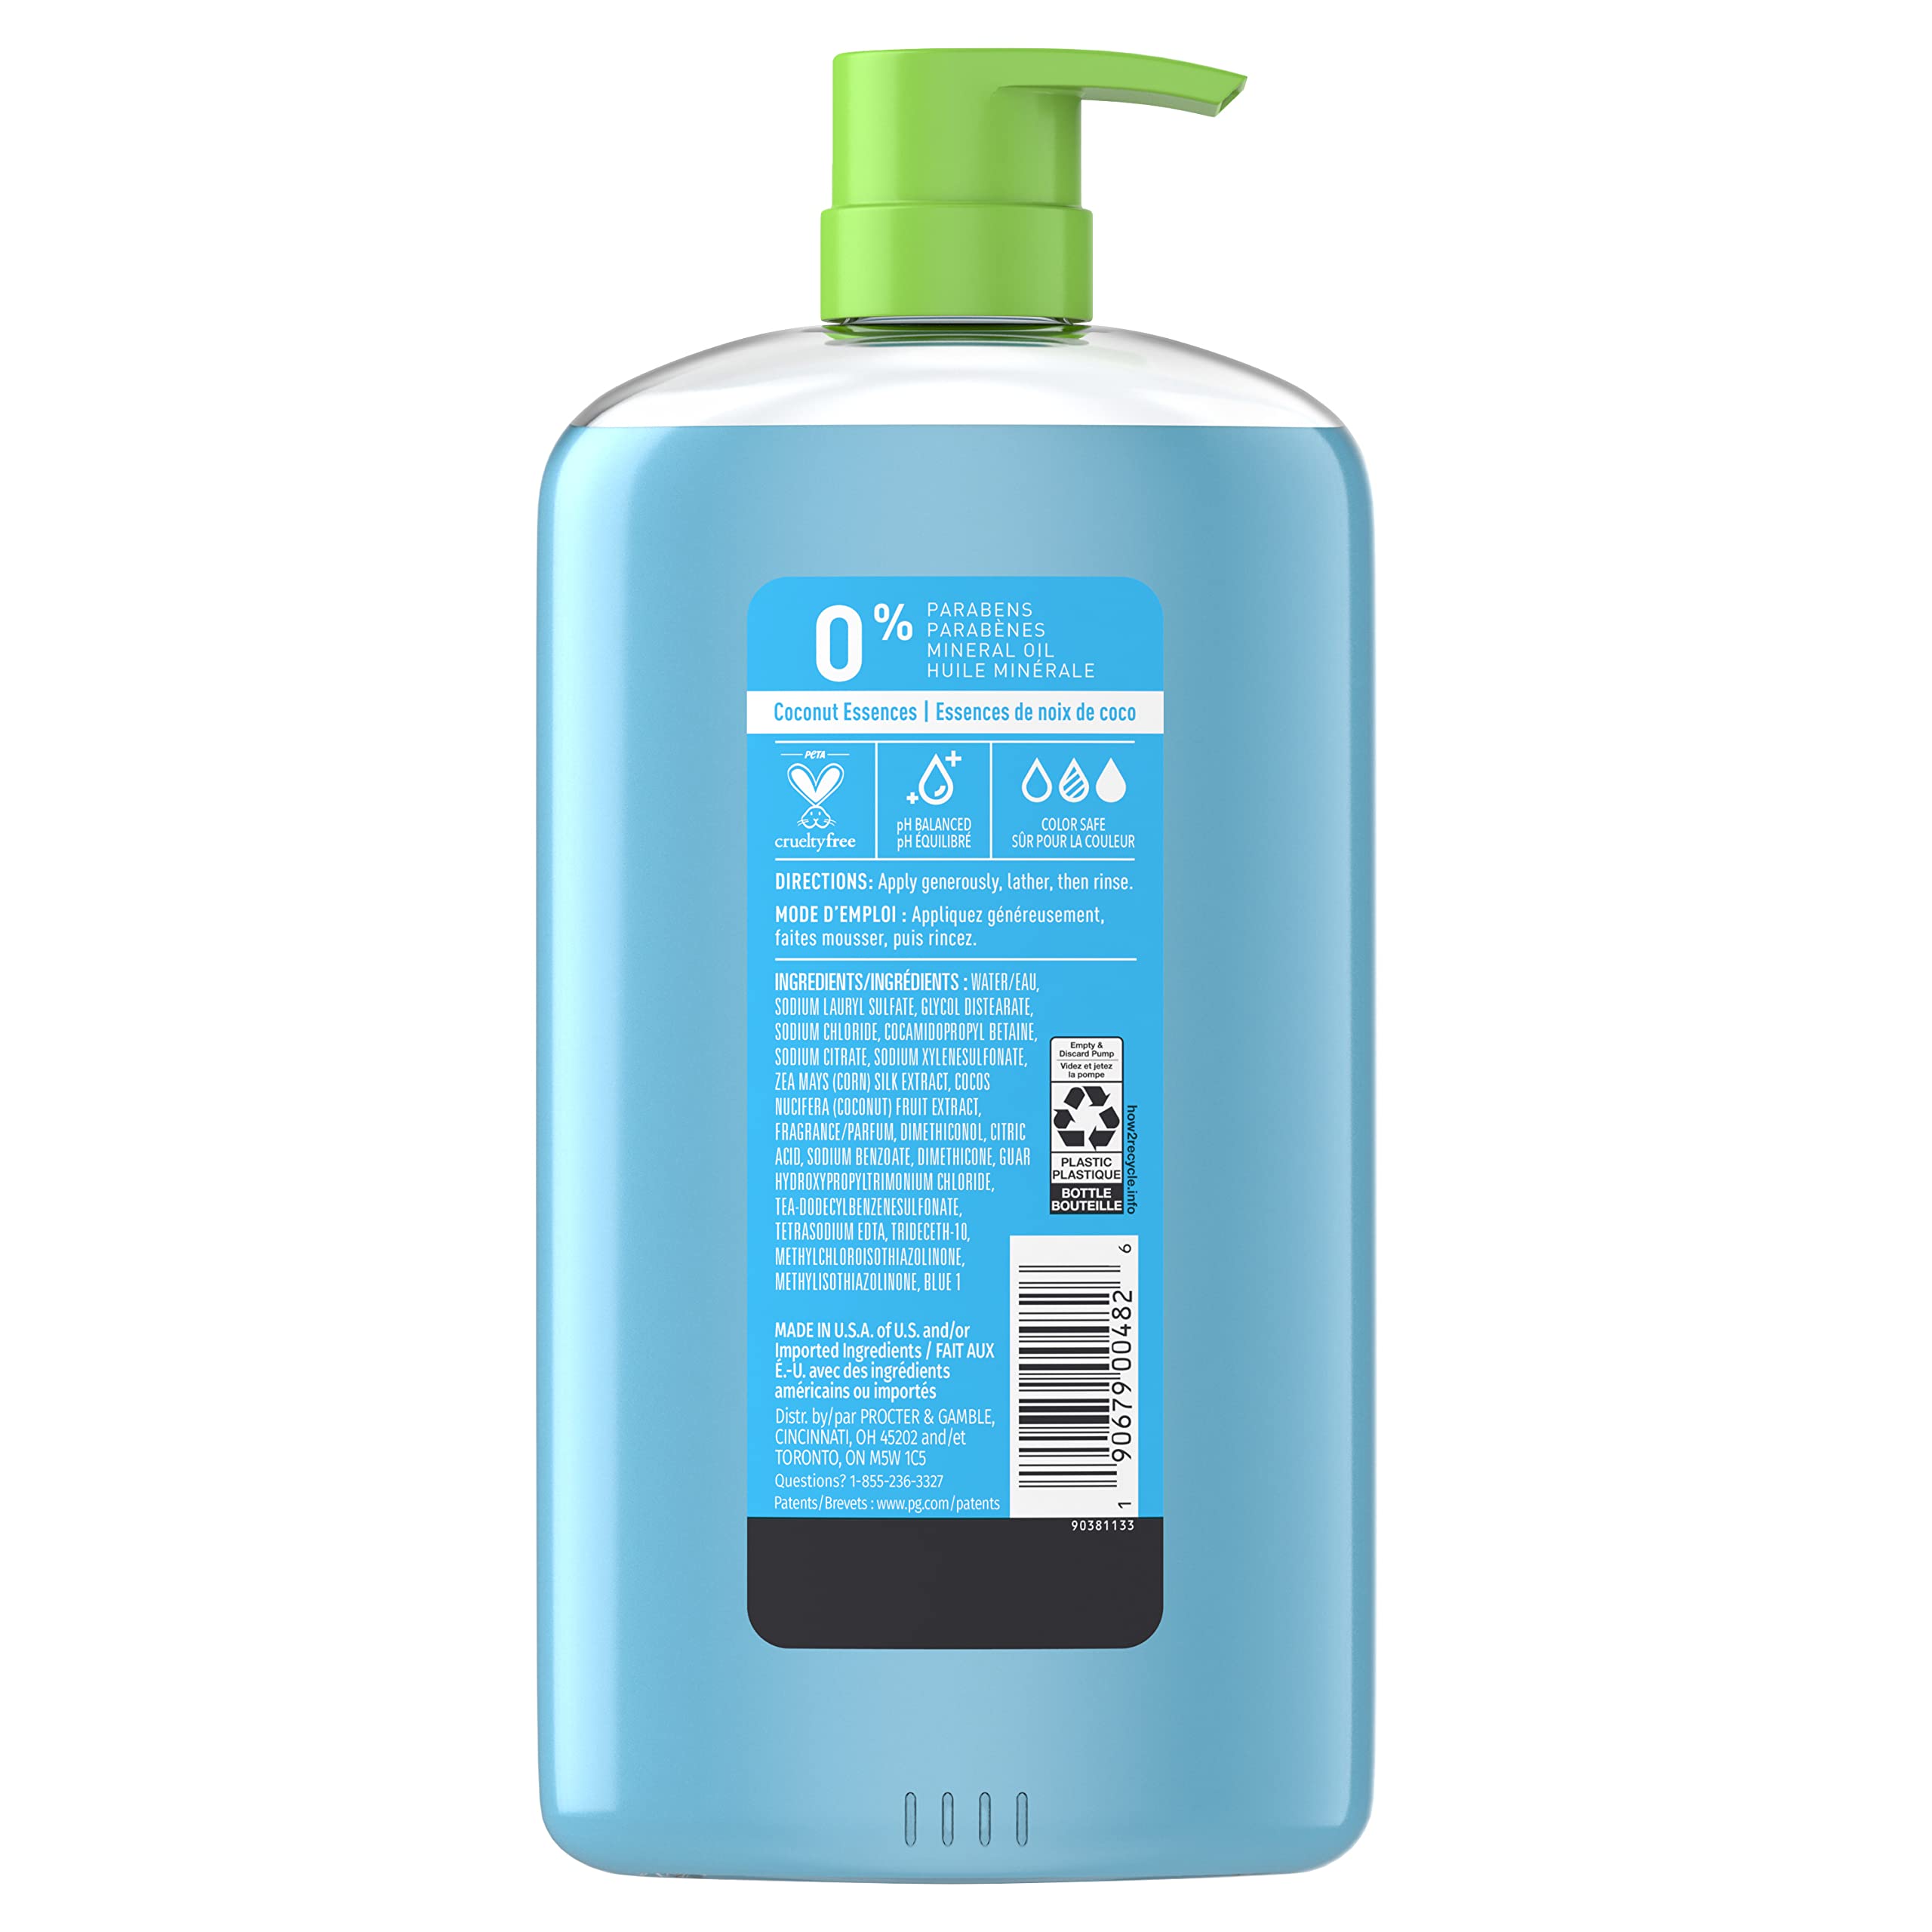 Herbal Essences Hello hydration 2in1 shampoo conditioner 29.2 Fl Oz